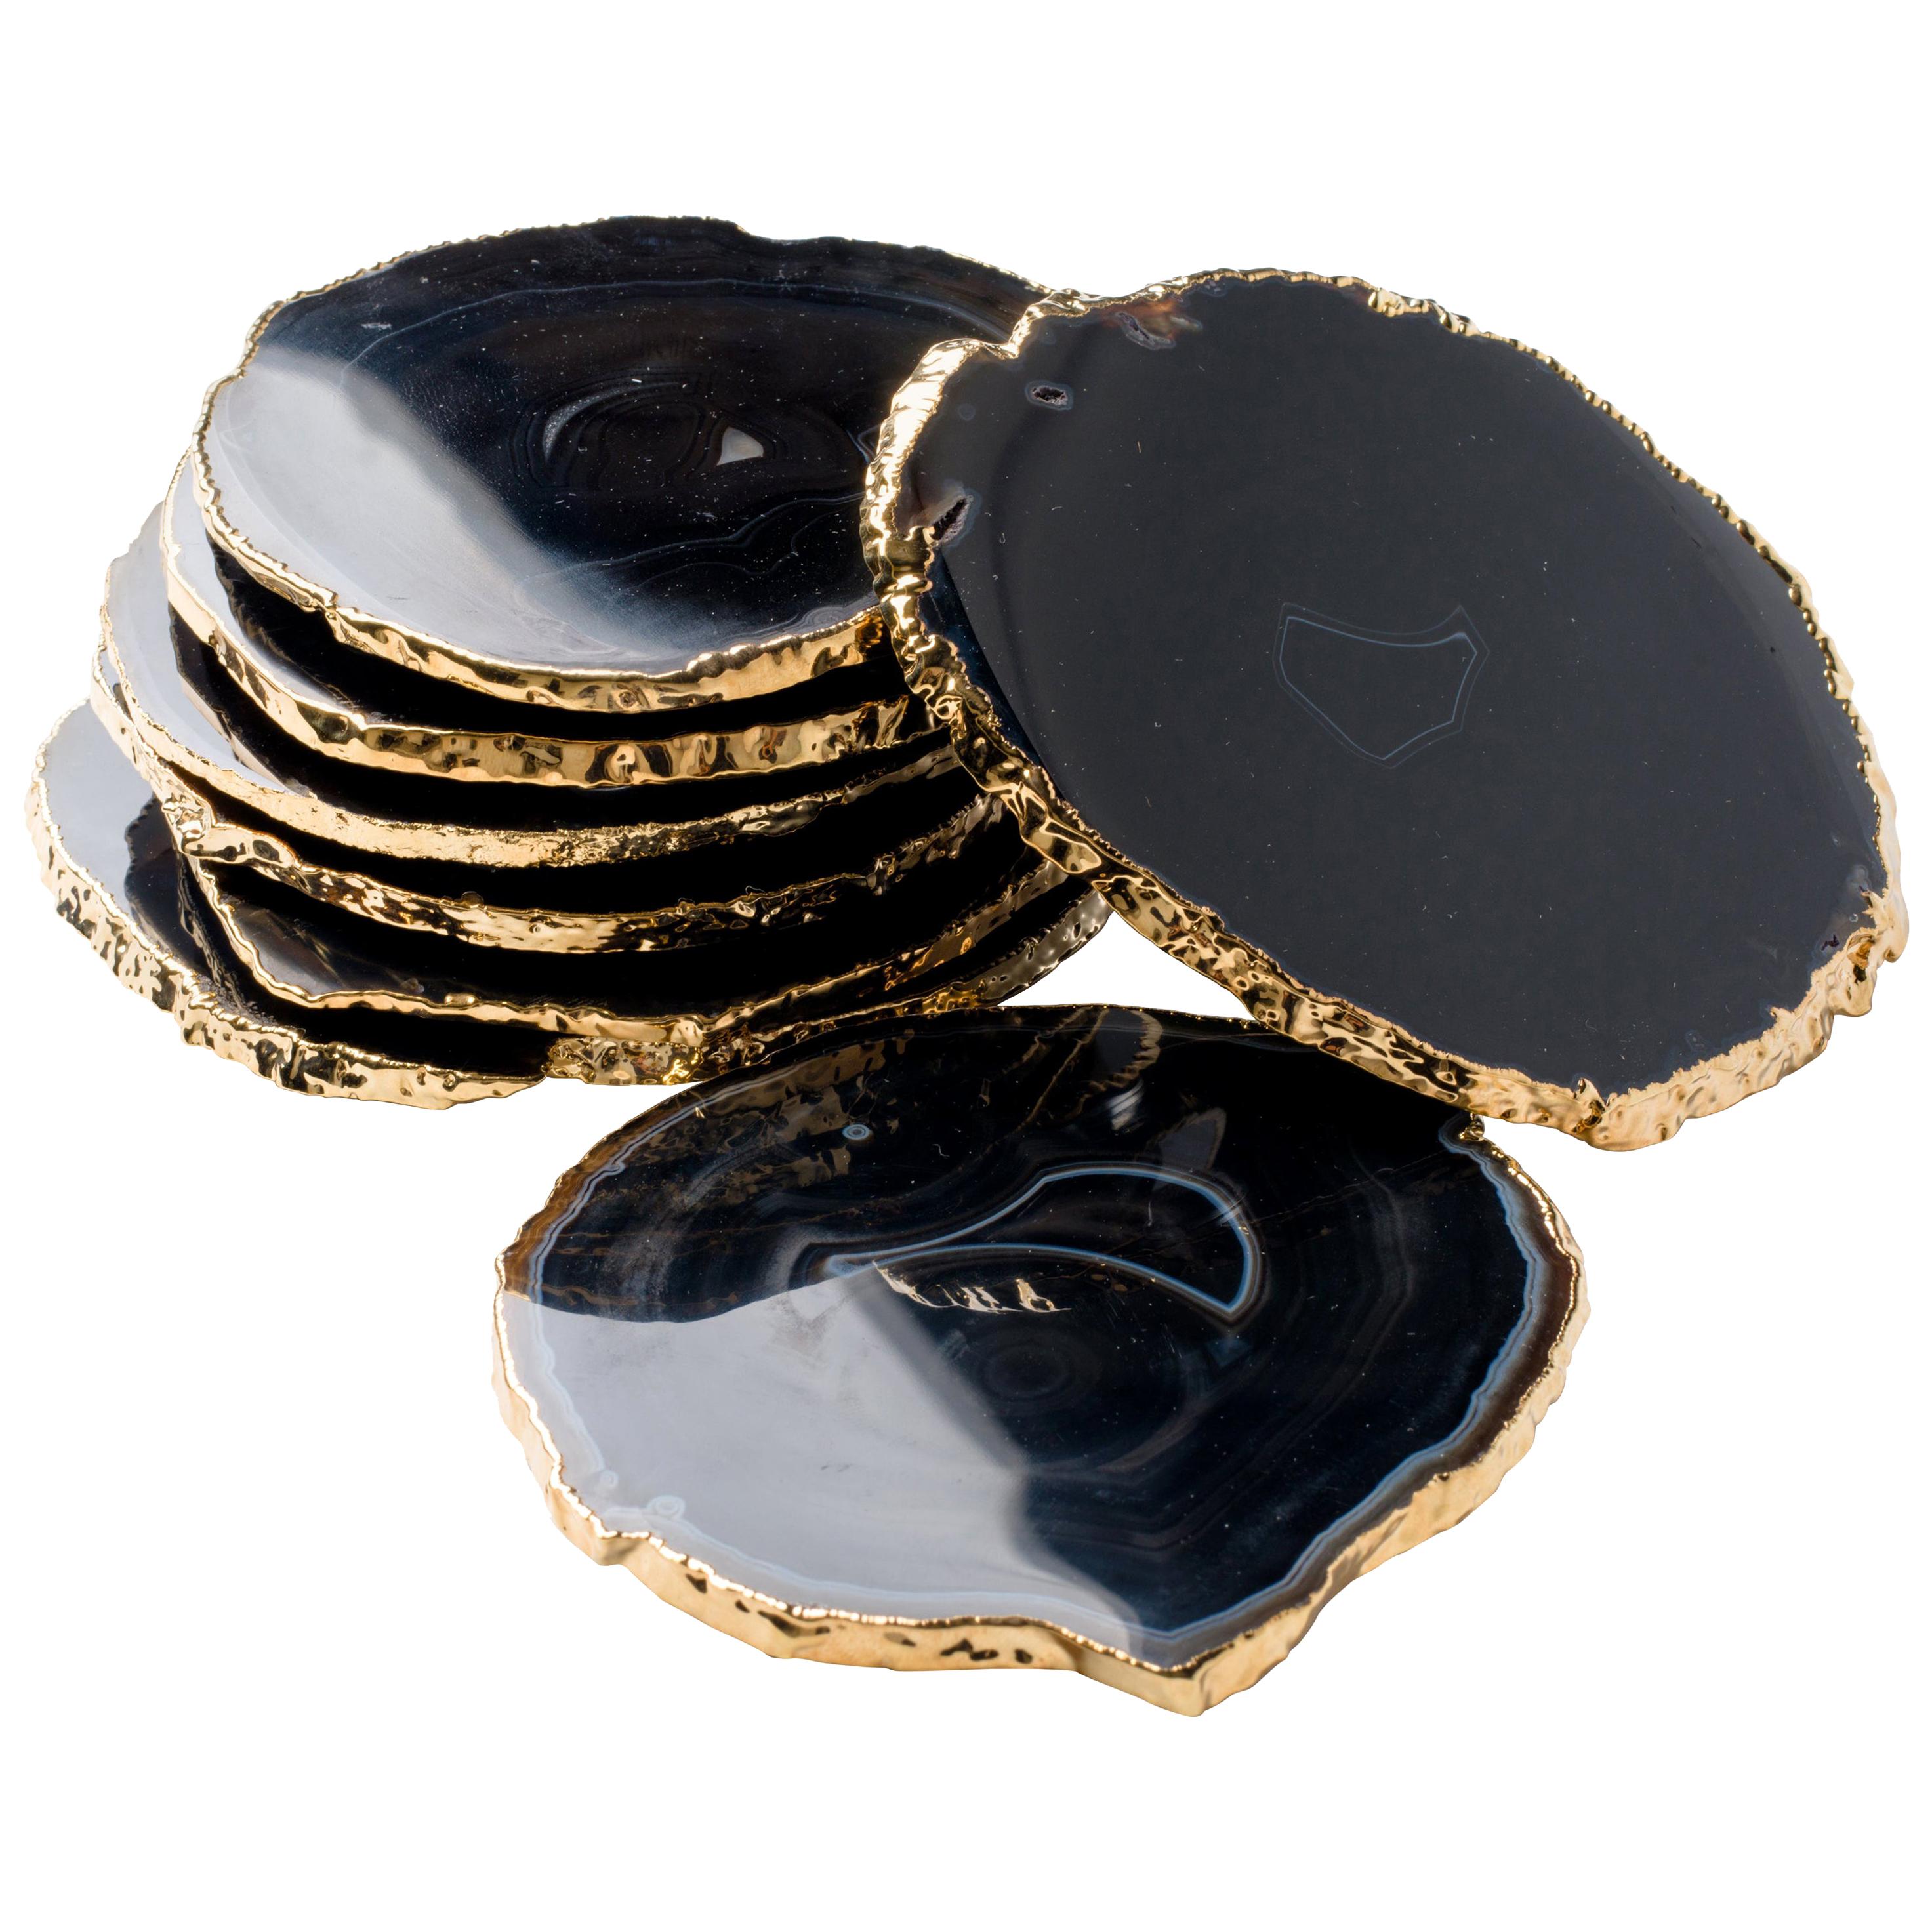 Set of Eight Semi-Precious Gemstone Coasters in Black Agate with 24 K Gold Trim